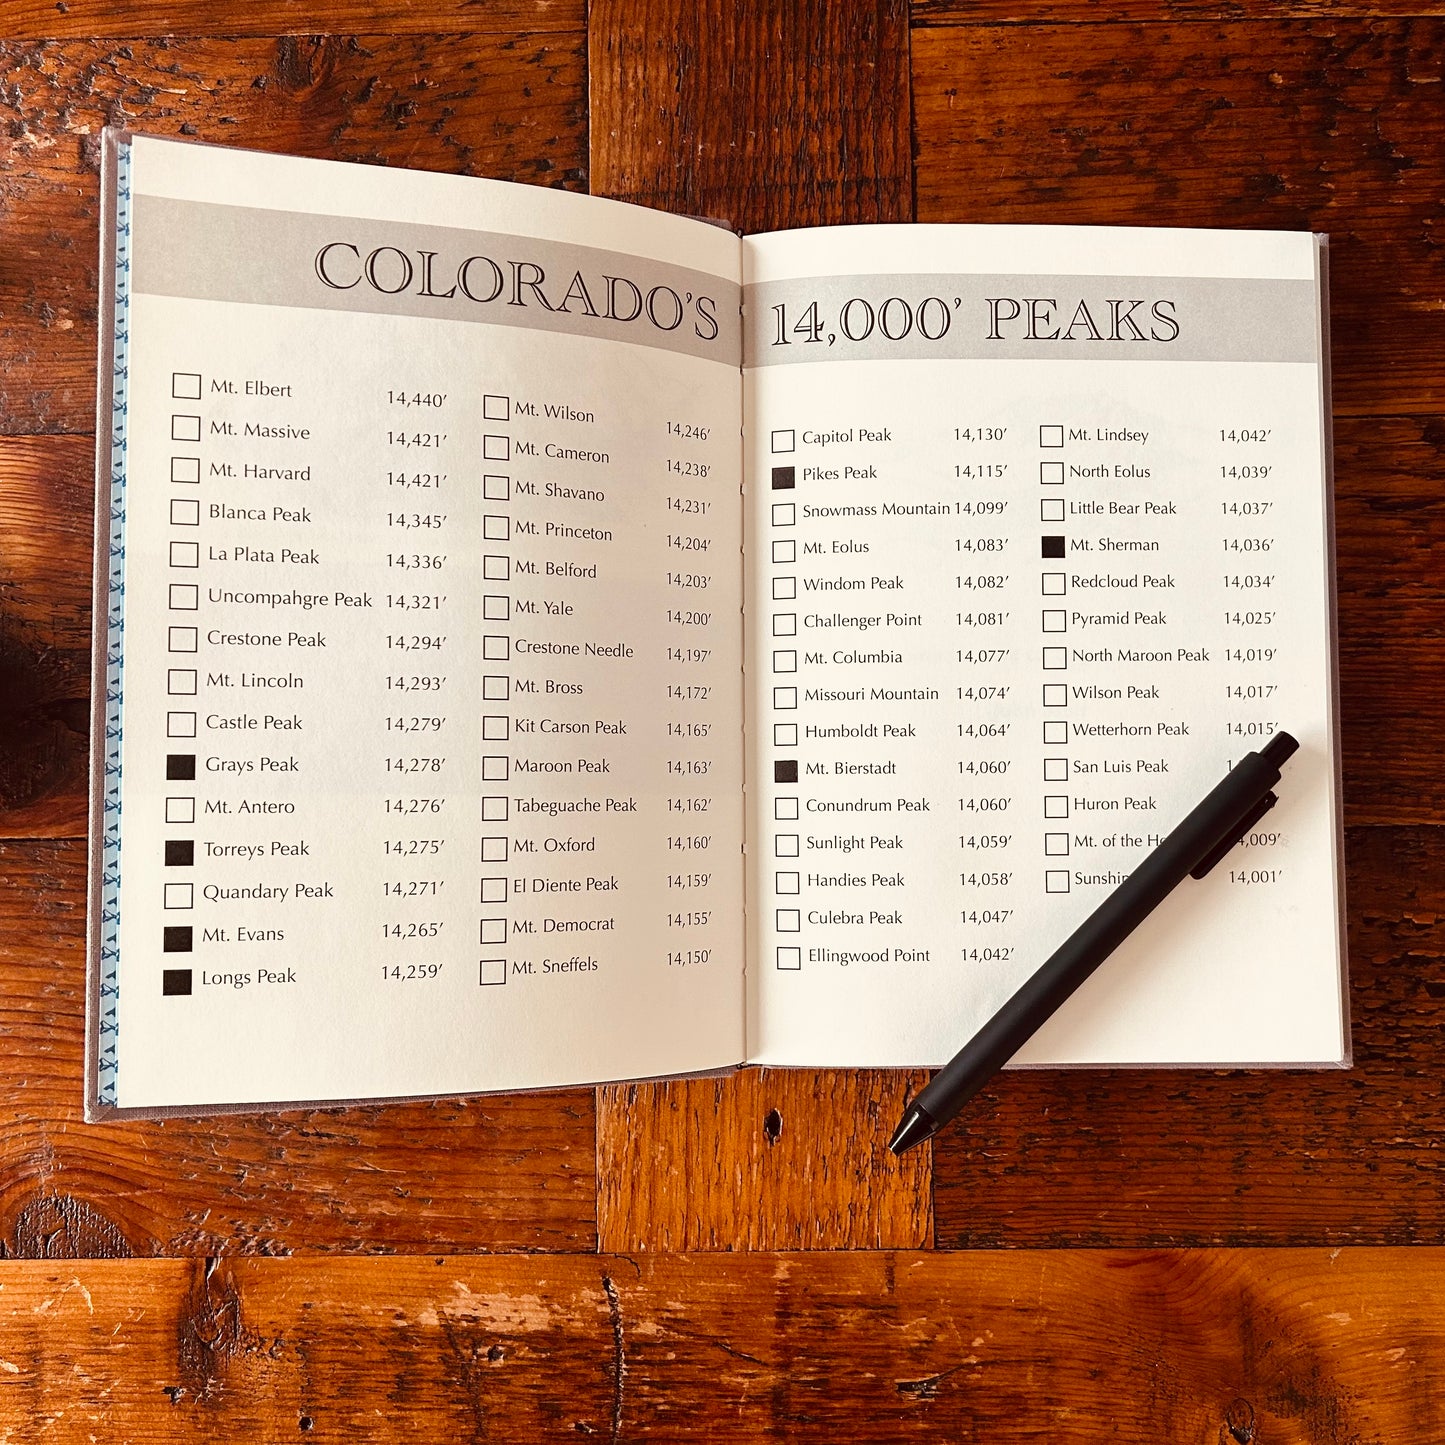 Summit Log of Colorado's 14,000' Peaks